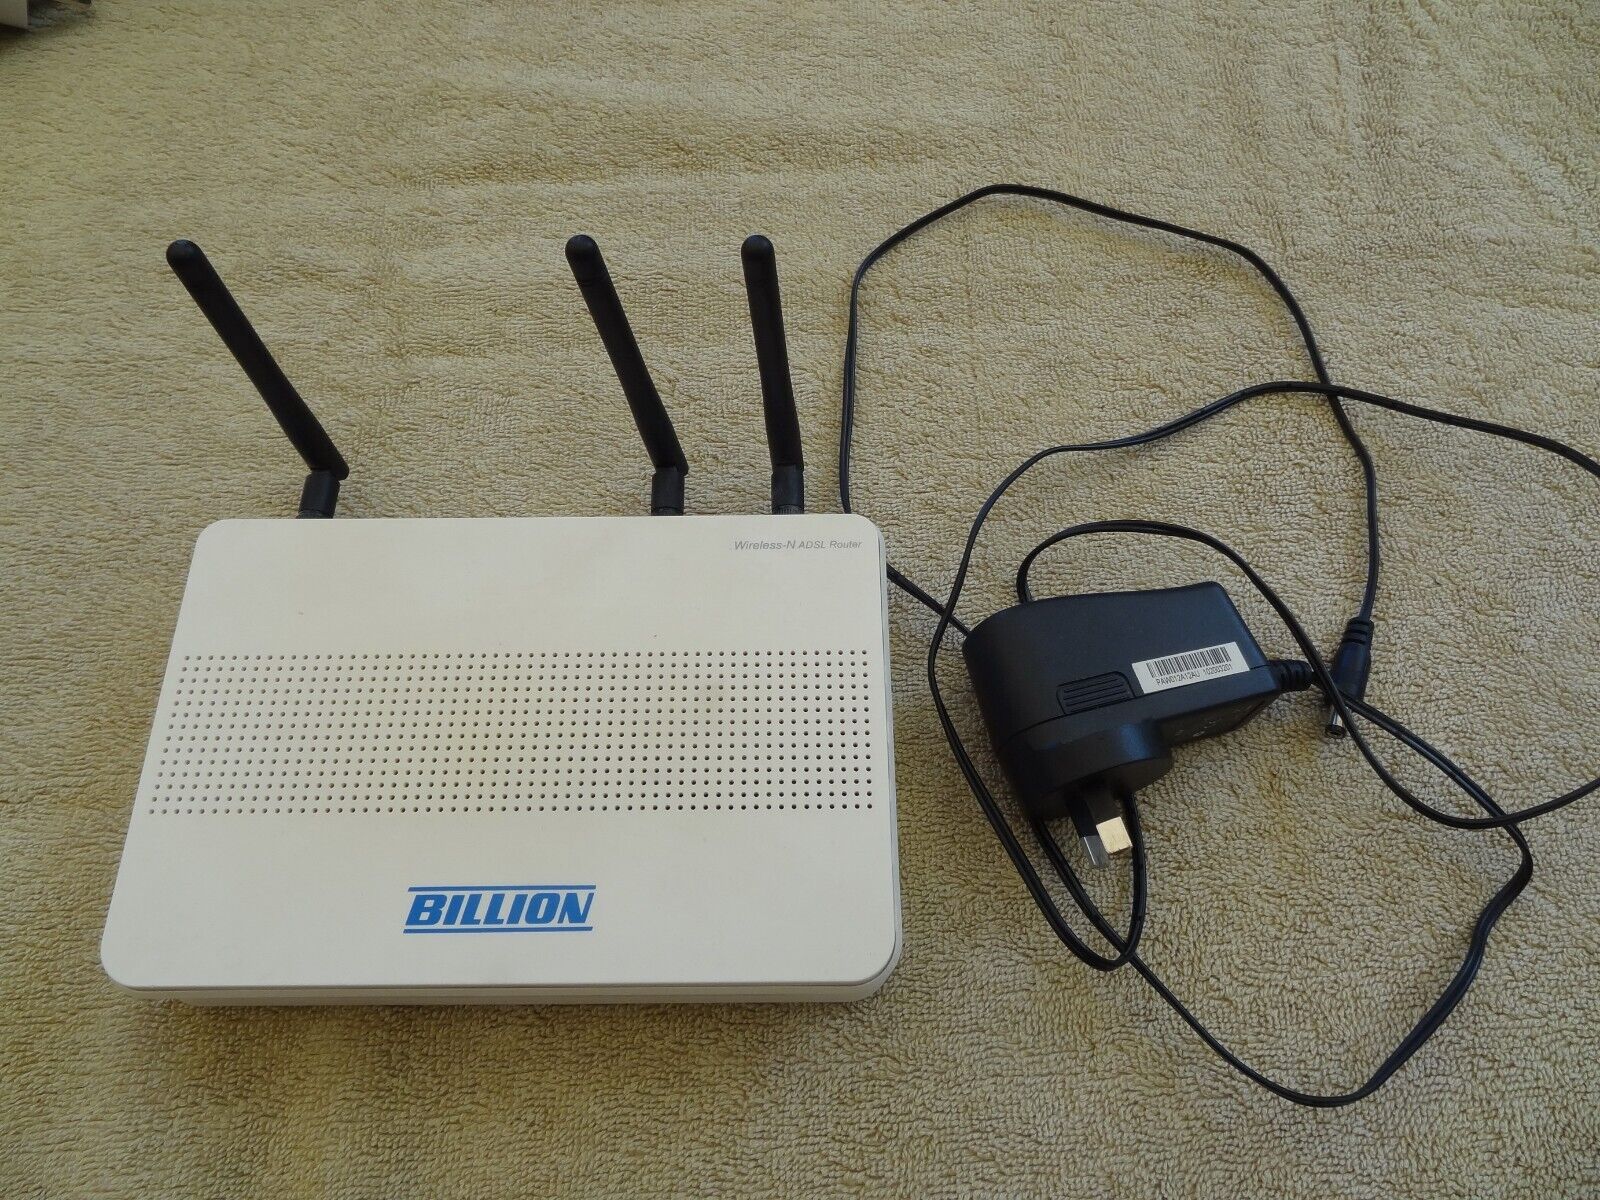 Billion BiPAC 7300N ADSL2+ router. 802.11n compatible.